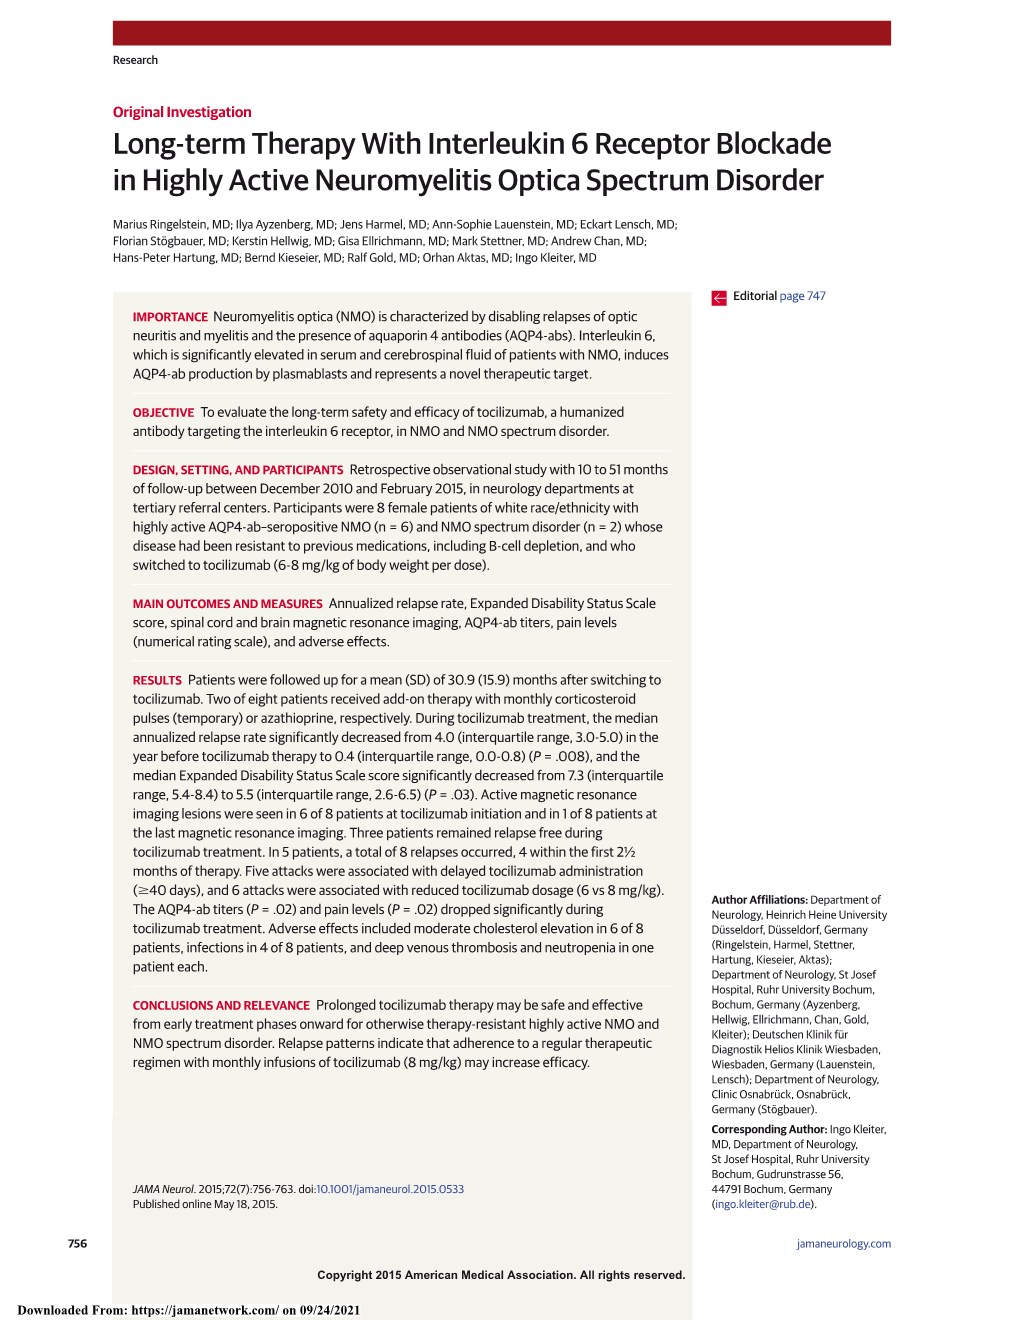 Long-Term Therapy with Interleukin 6 Receptor Blockade in Highly Active Neuromyelitis Optica Spectrum Disorder